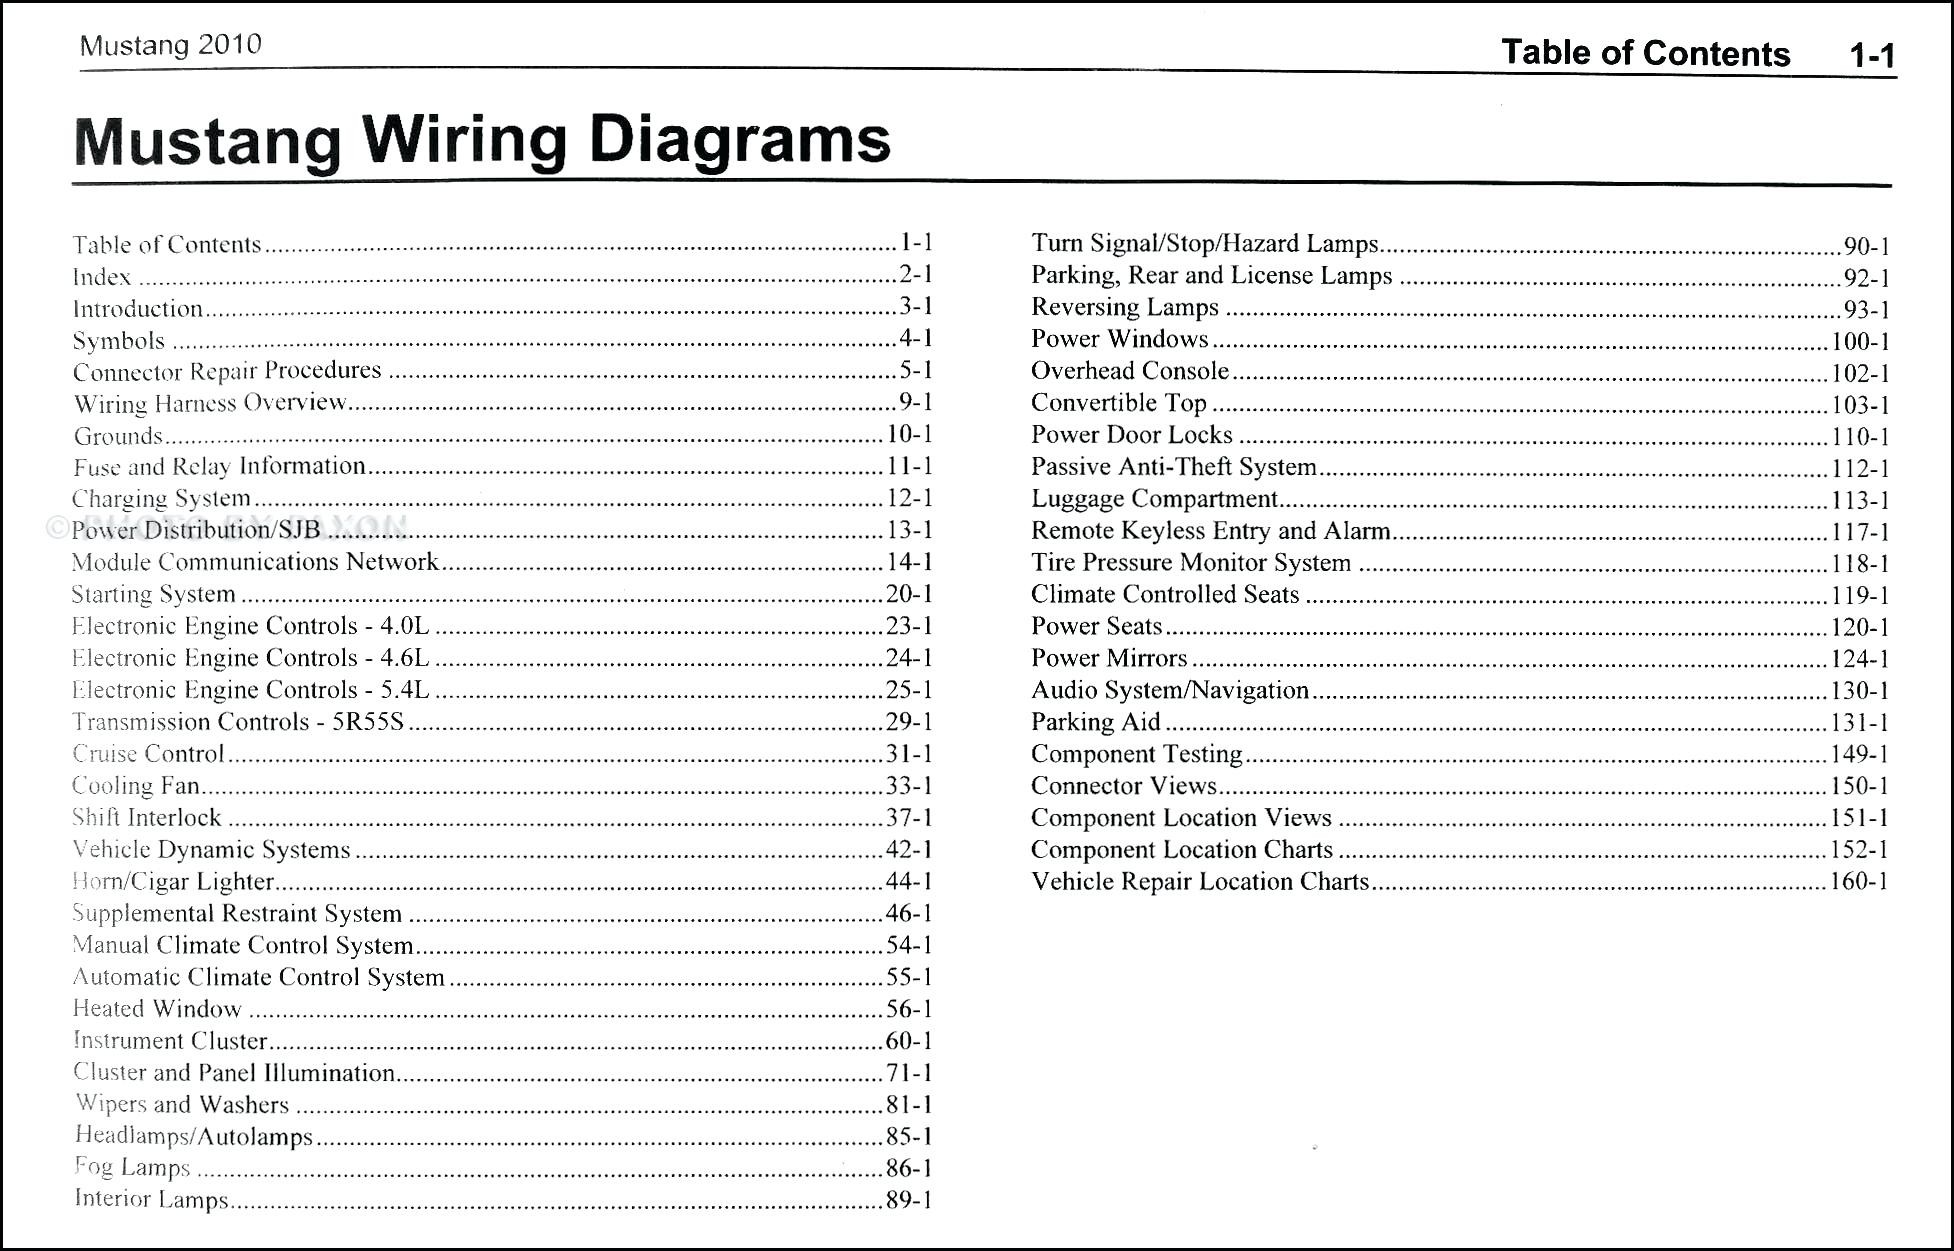 1990 Mustang Wiring Diagram Wiring Diagram for Nutone Doorbell ford Mustang Manual original 1964 Of 1990 Mustang Wiring Diagram